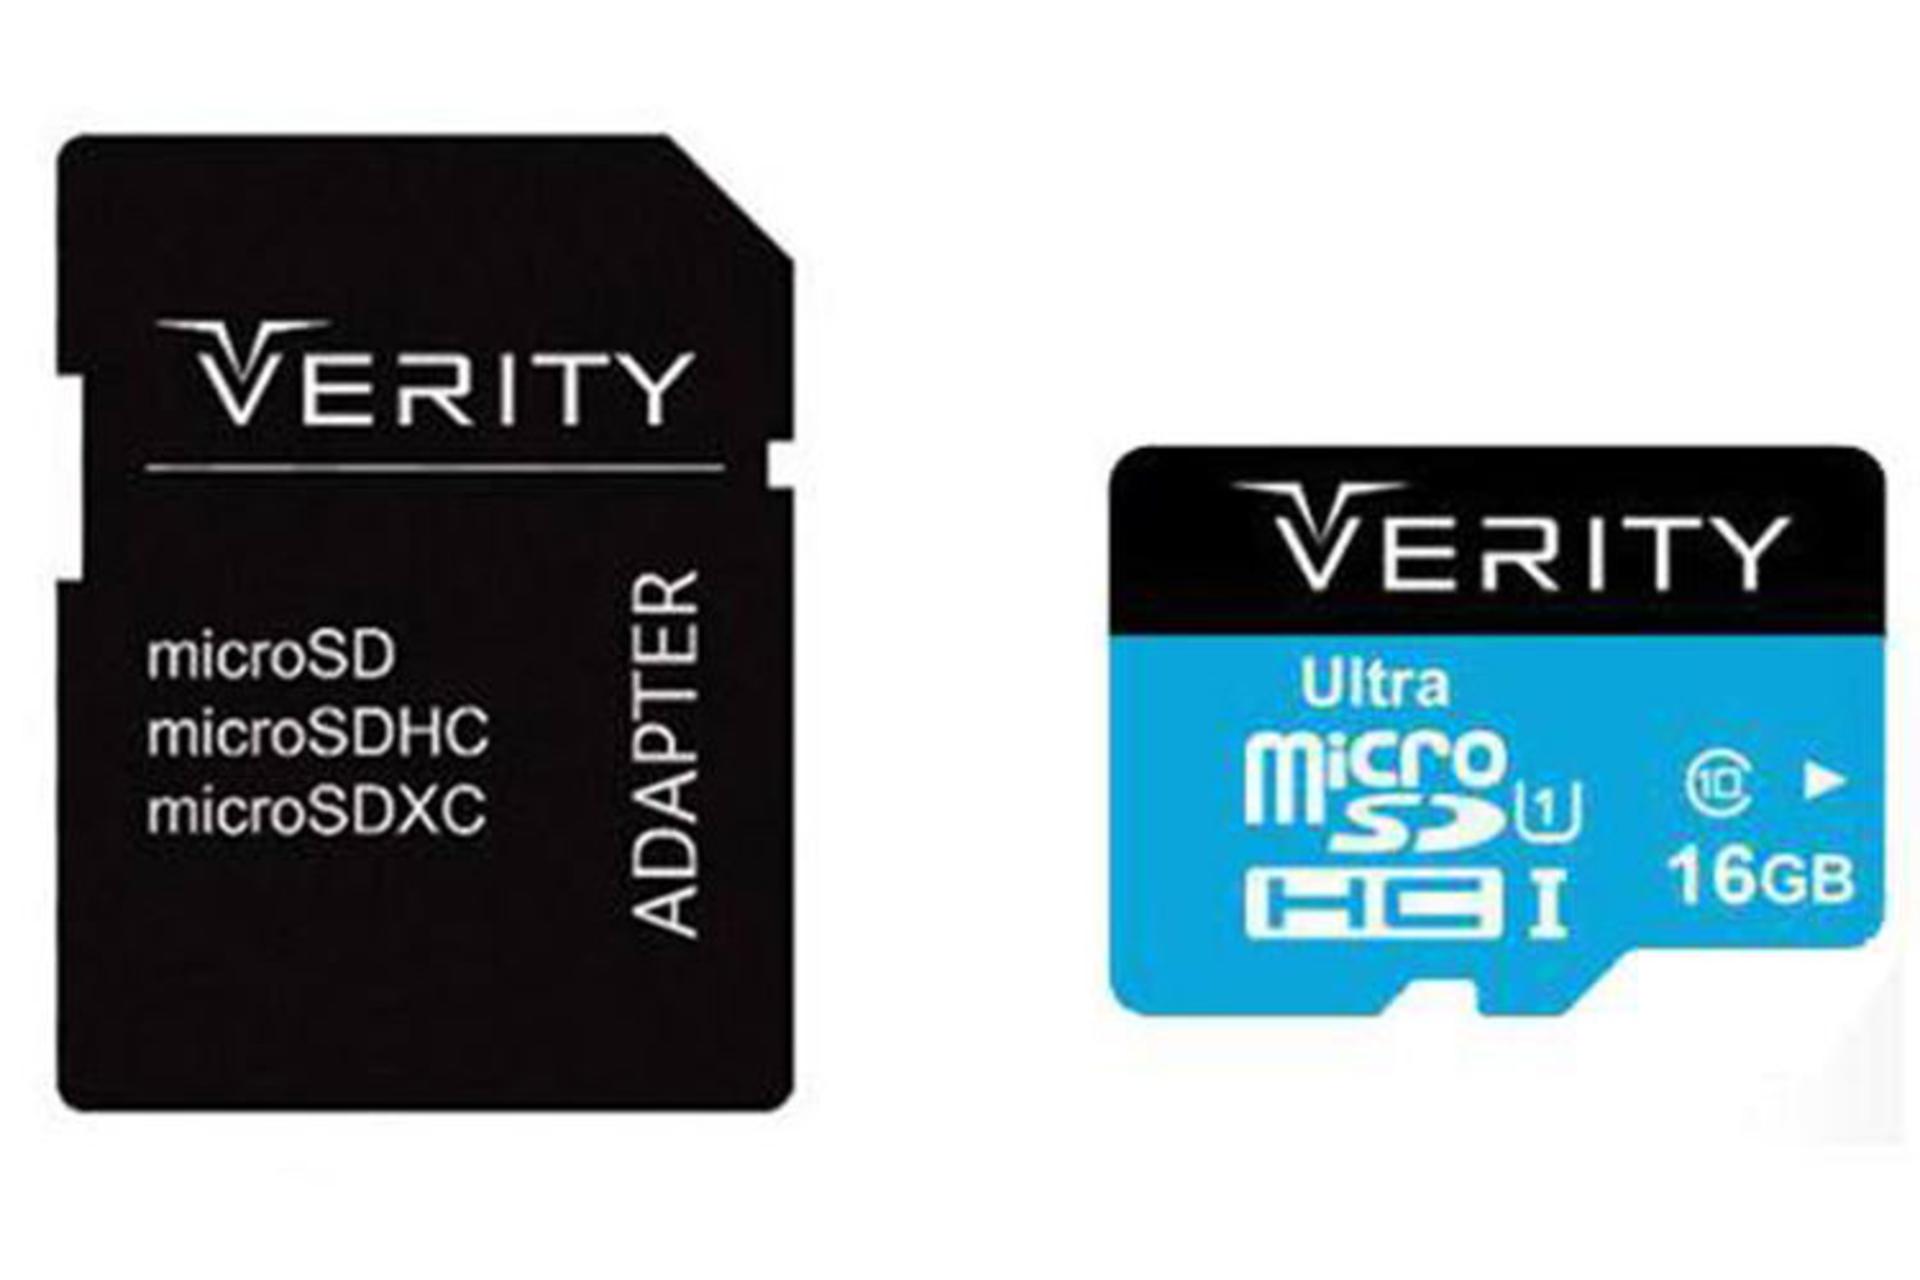 Verity Ultra microSDHC Class 10 UHS-I U1 16GB